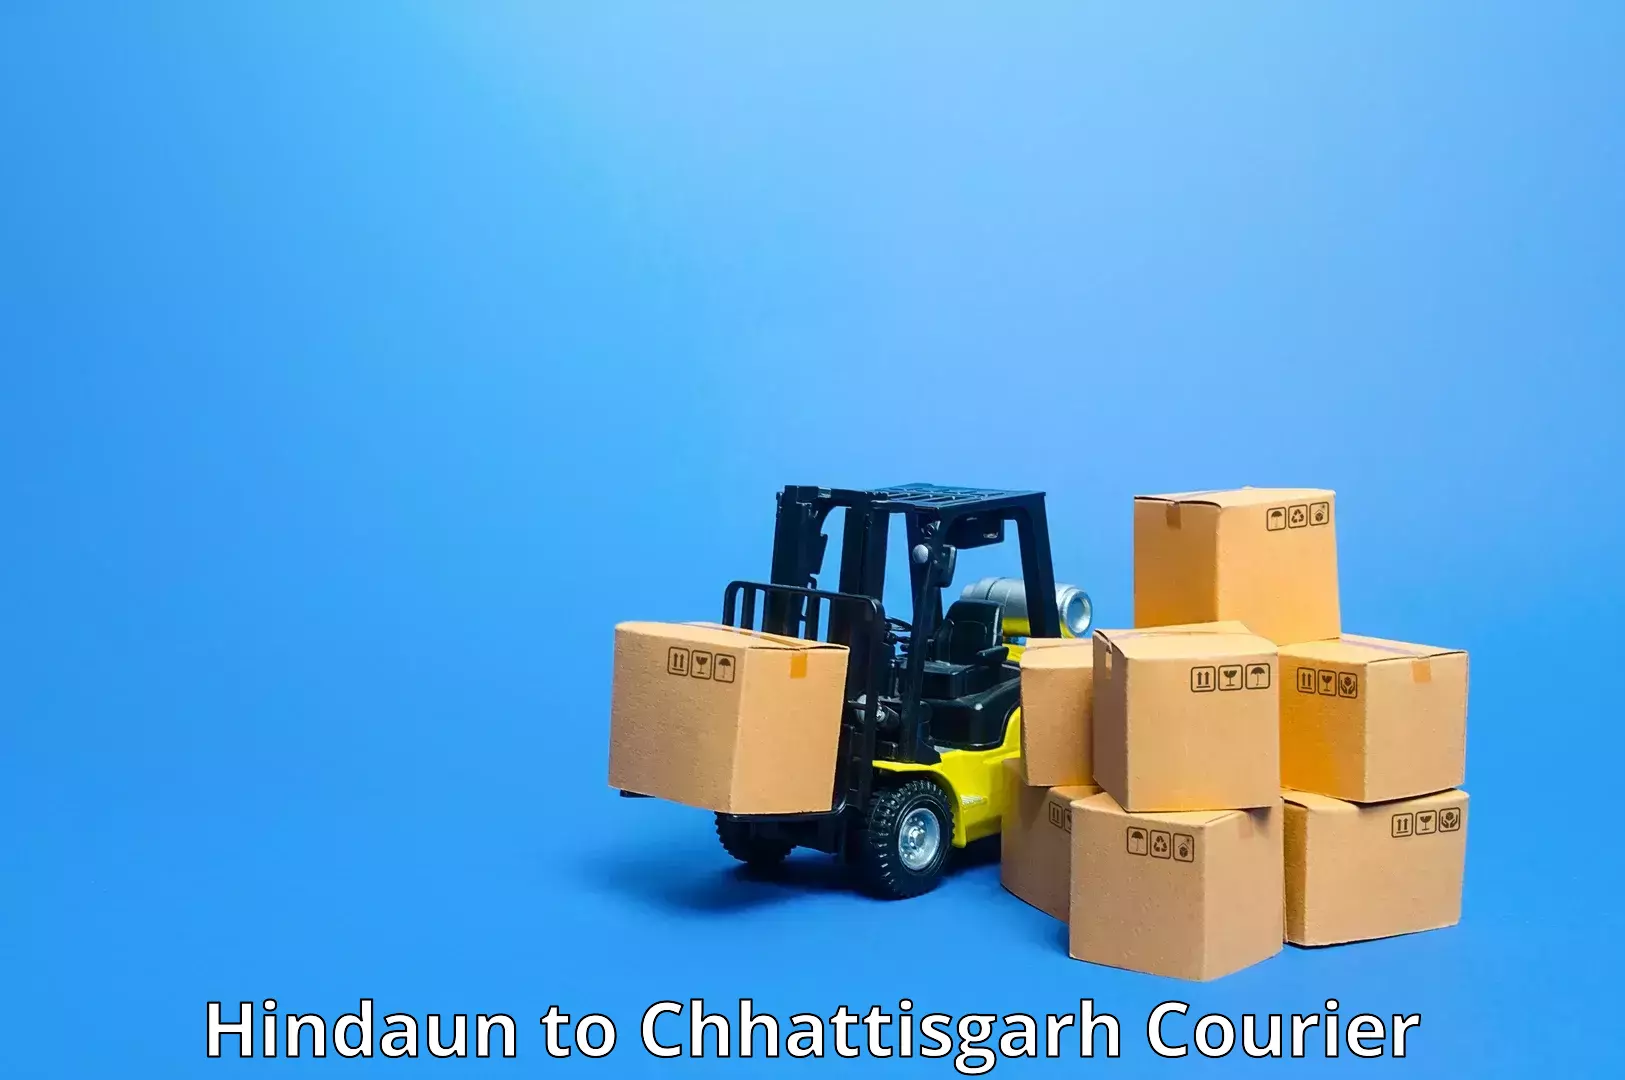 State-of-the-art courier technology Hindaun to Patna Chhattisgarh